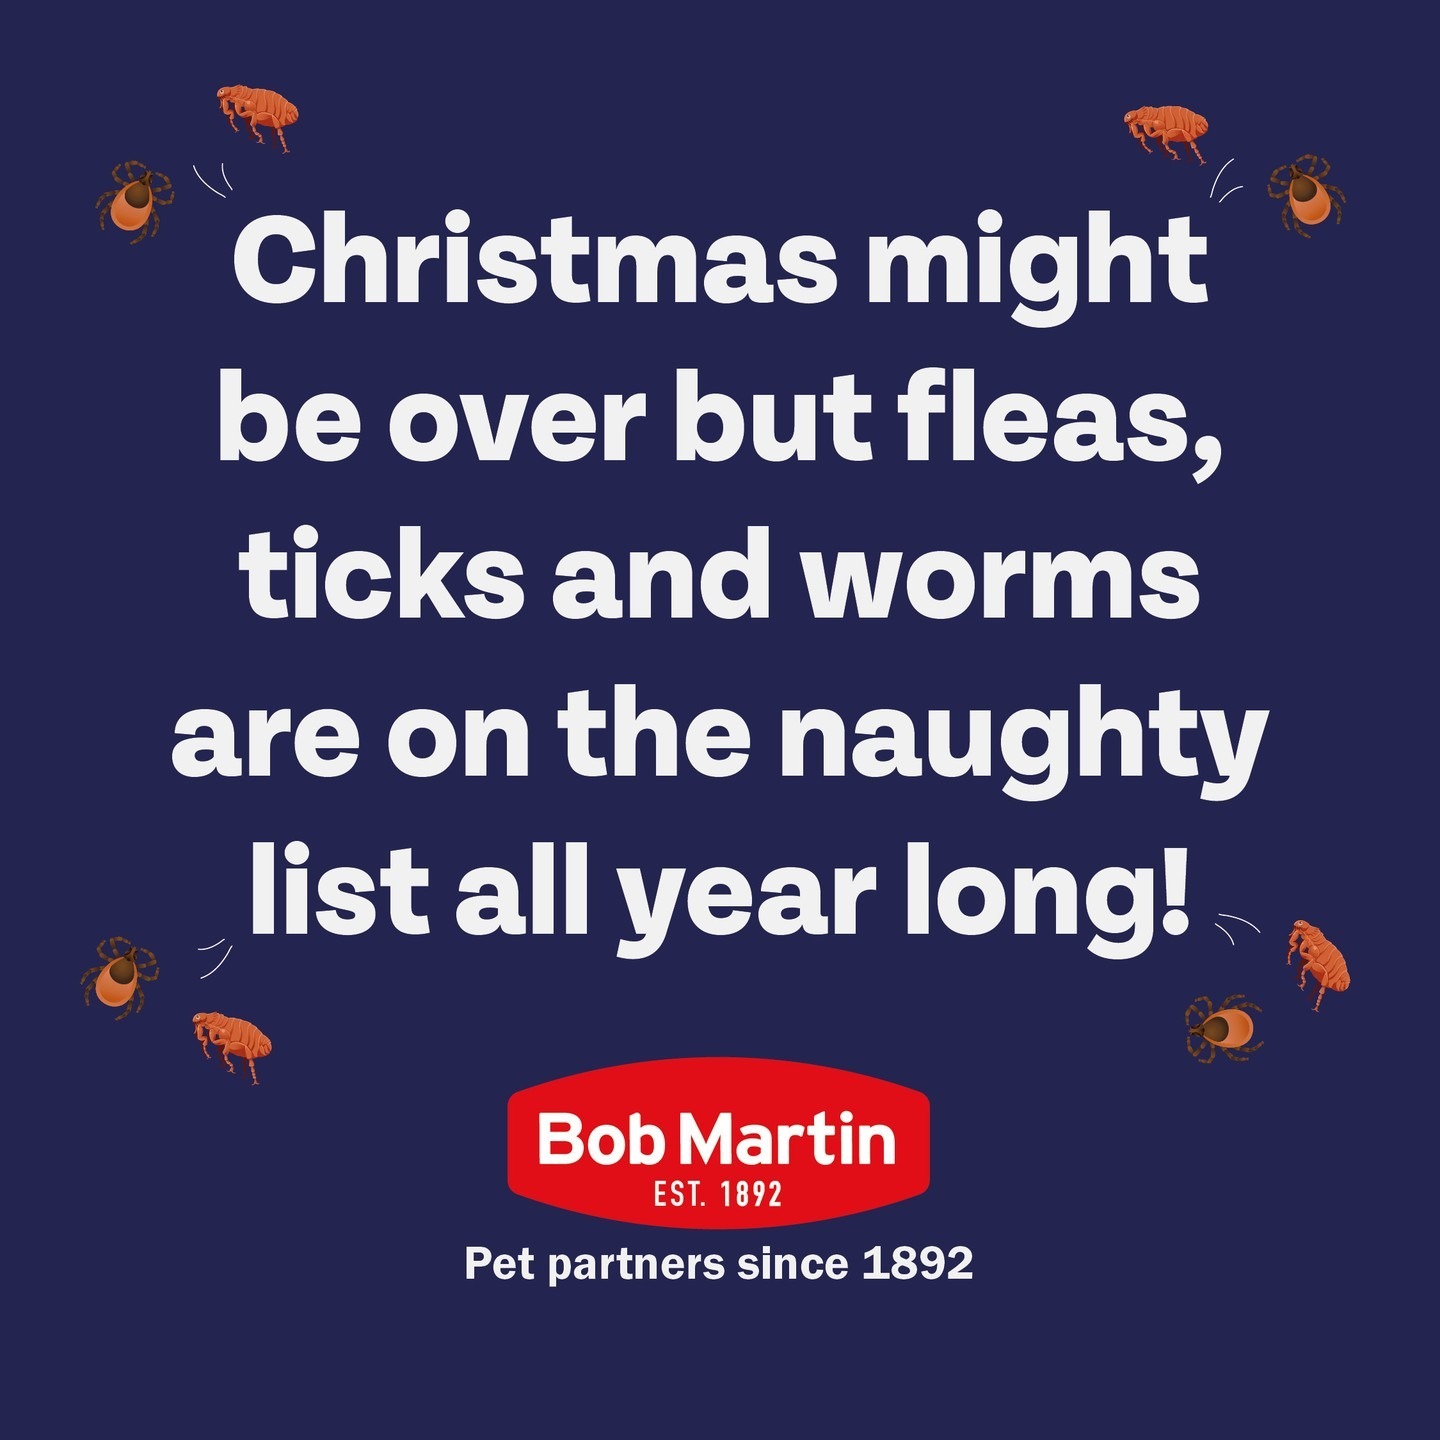 Banish fleas, ticks and worms 'fur' good with Bob Martin!

.
.
.
 #BobMartin #PetHealthcare #Flea #Worm #Dog #Cat #SpotOn #Pets #PetsOfInstagram #PetCare #PetTips #PetHealth #HealthyPets #ActivePets